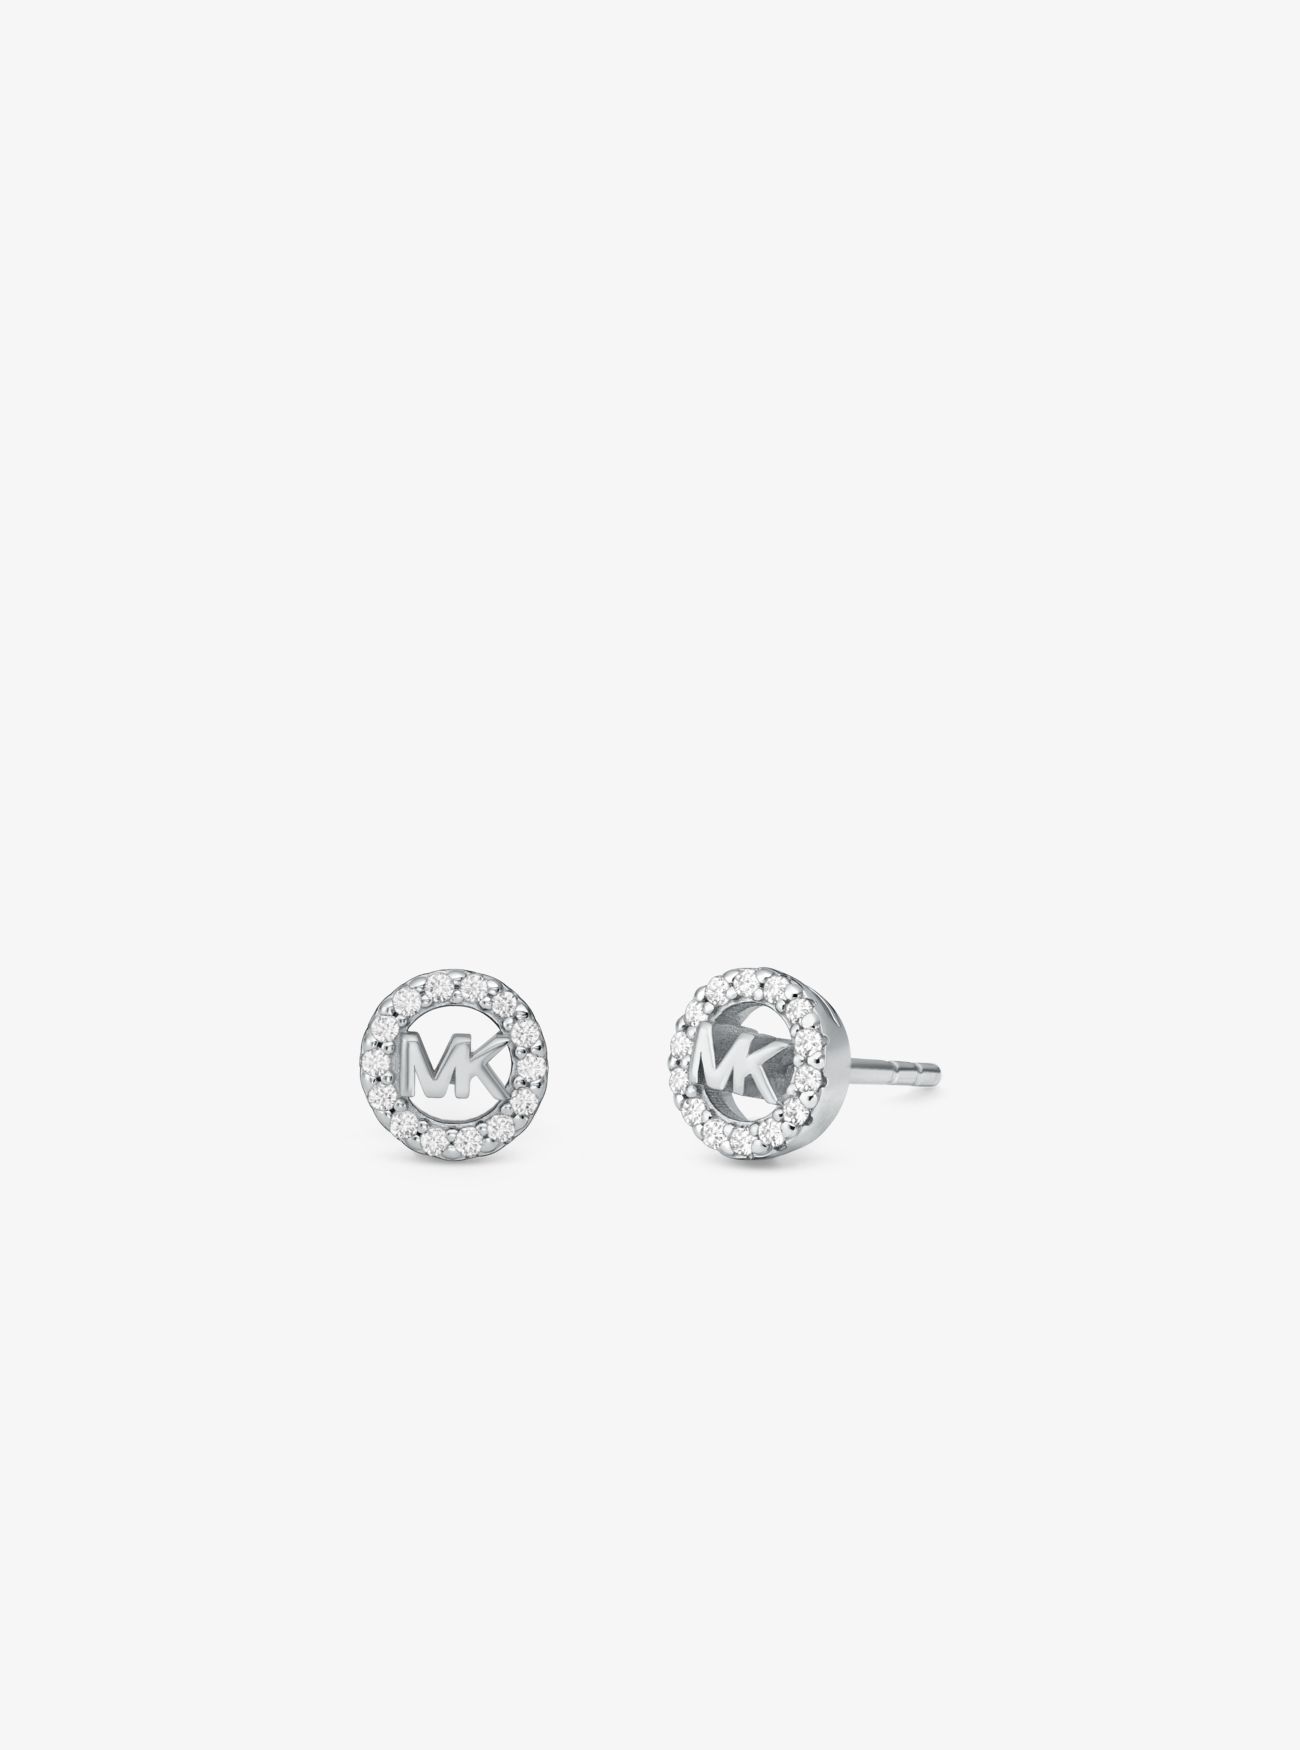 MK Fulton Precious-Metal Plated Sterling Silver PavÃ© Logo Charm Stud Earrings - Silver - Michael Kors